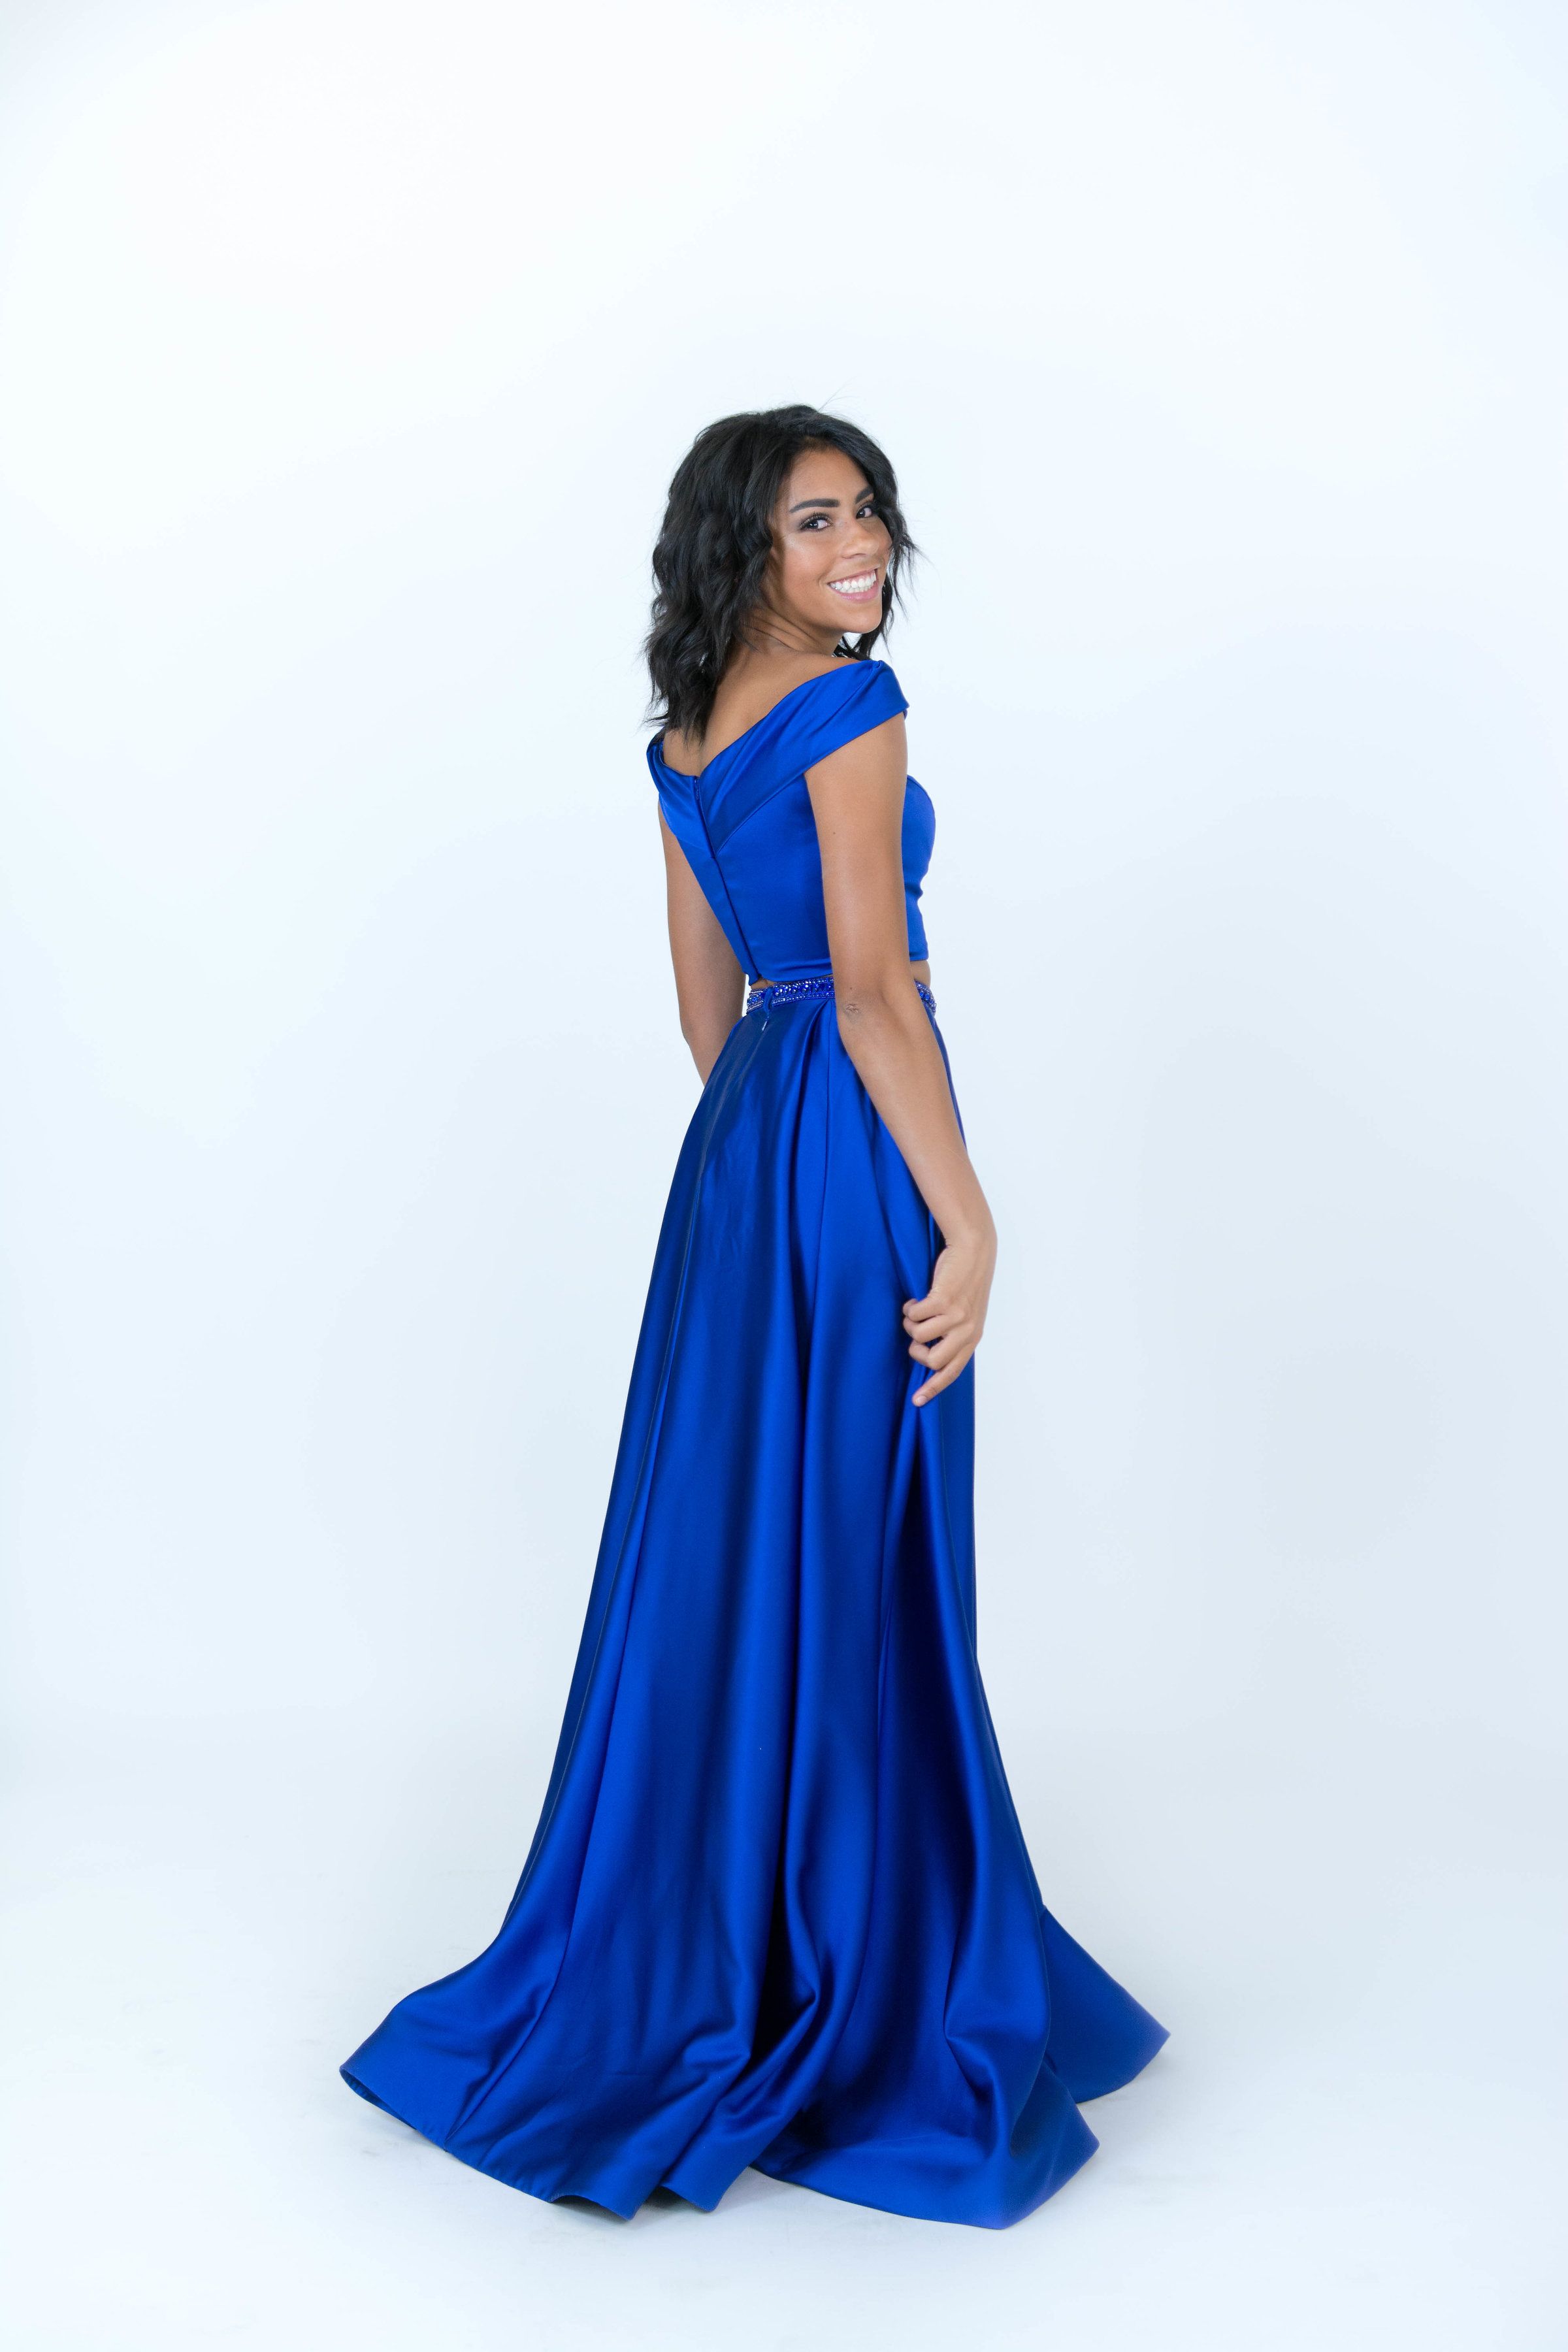 Sherri Hill Royal Blue Flowy Dress Ypsilon Dresses Prom Pageant Evening